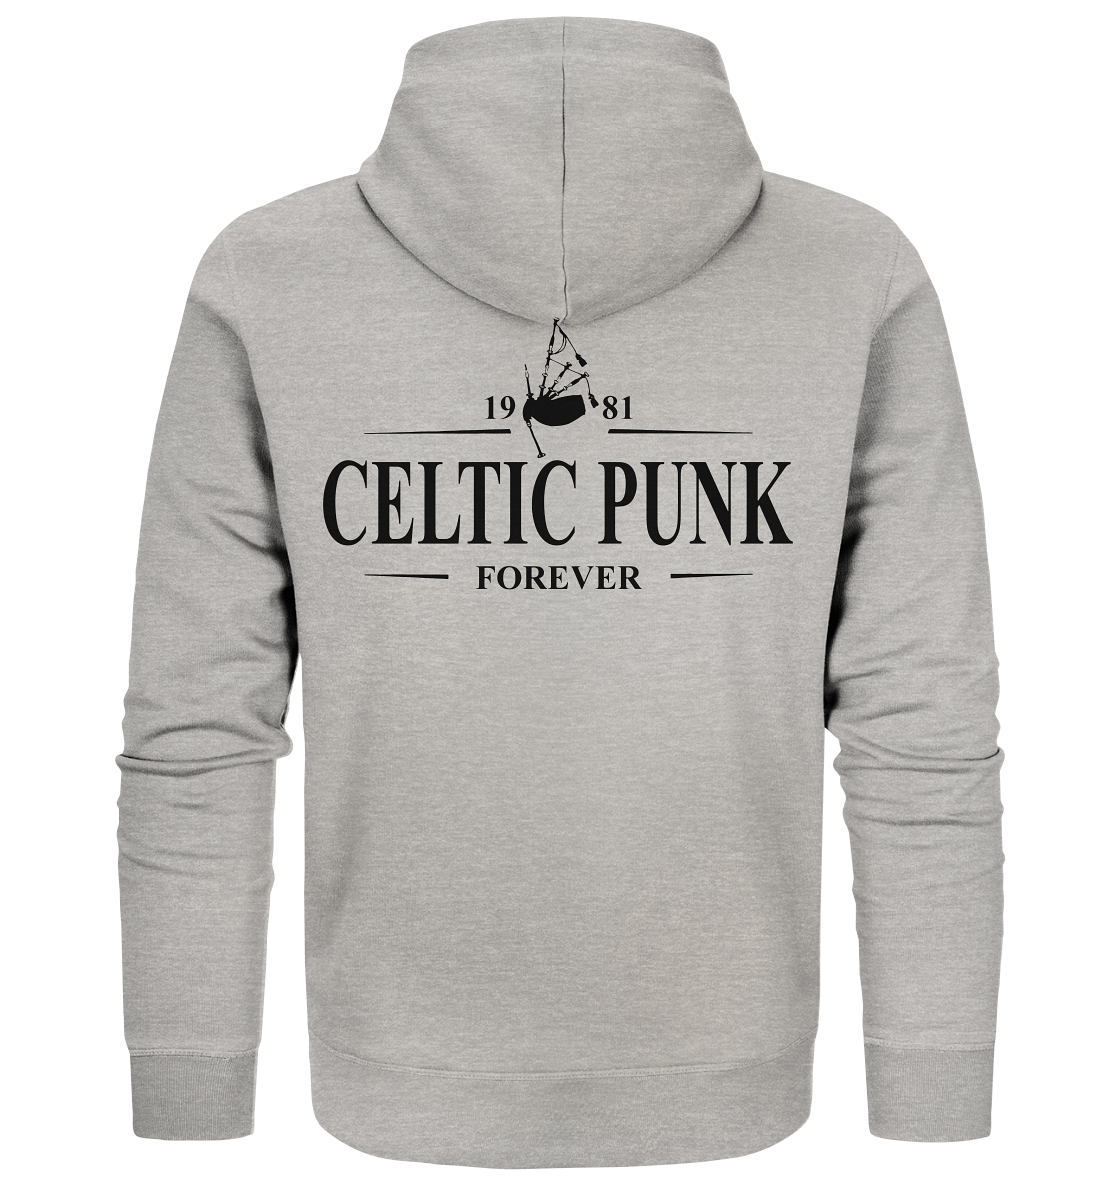 Celtic Punk "Forever" - Organic Zipper